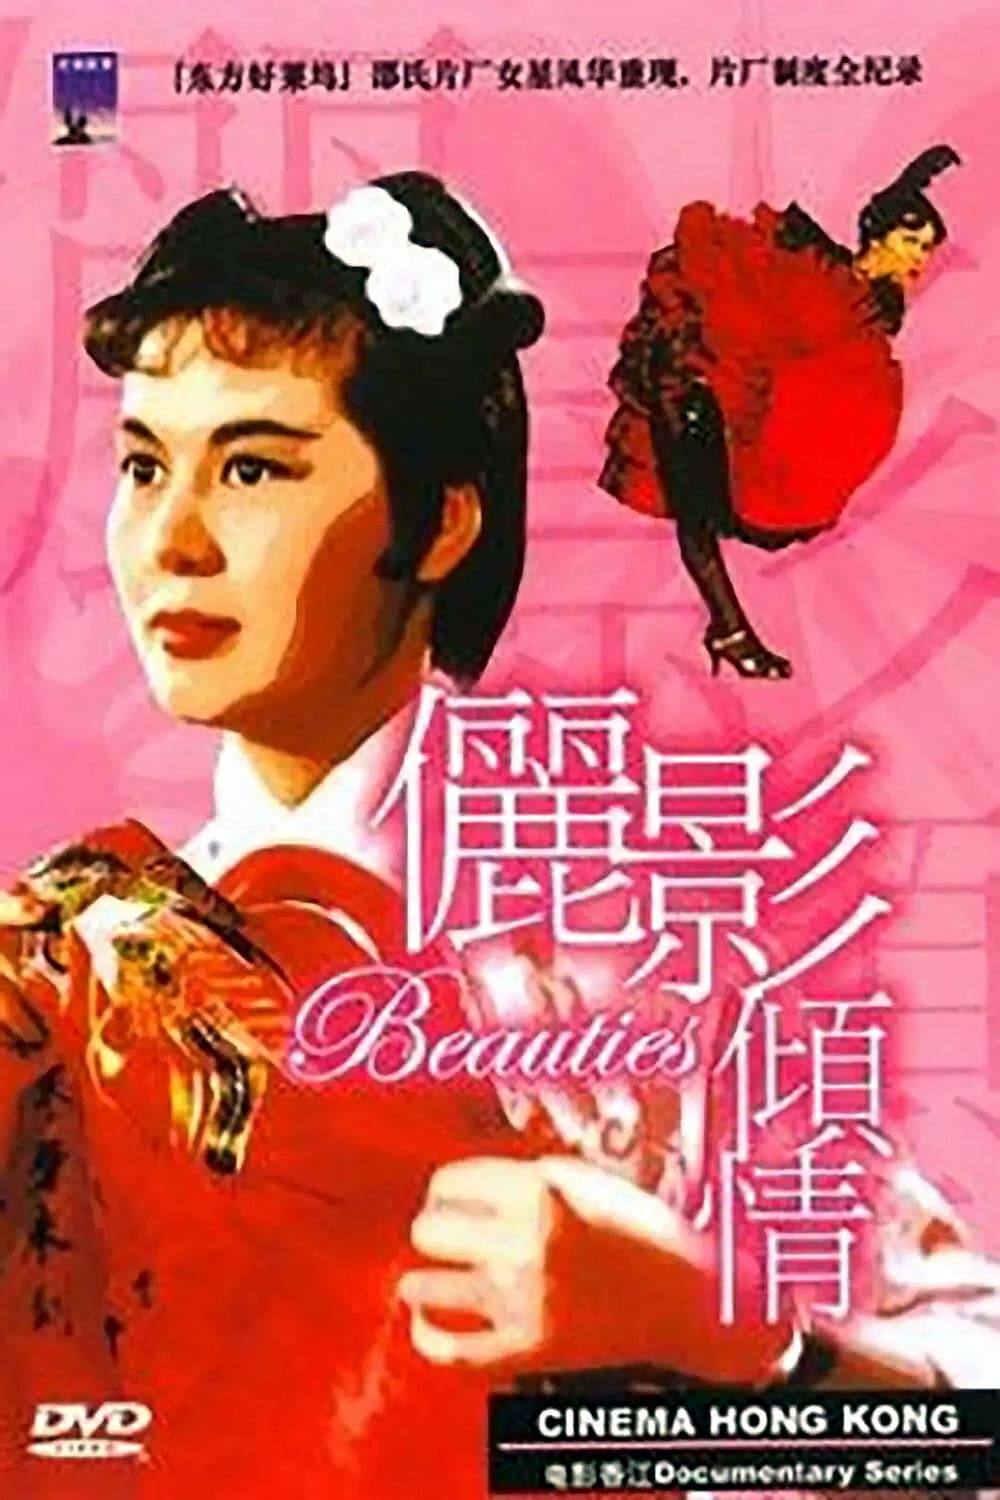 Cinema Hong Kong: The Beauties of the Shaw Studio (2003)